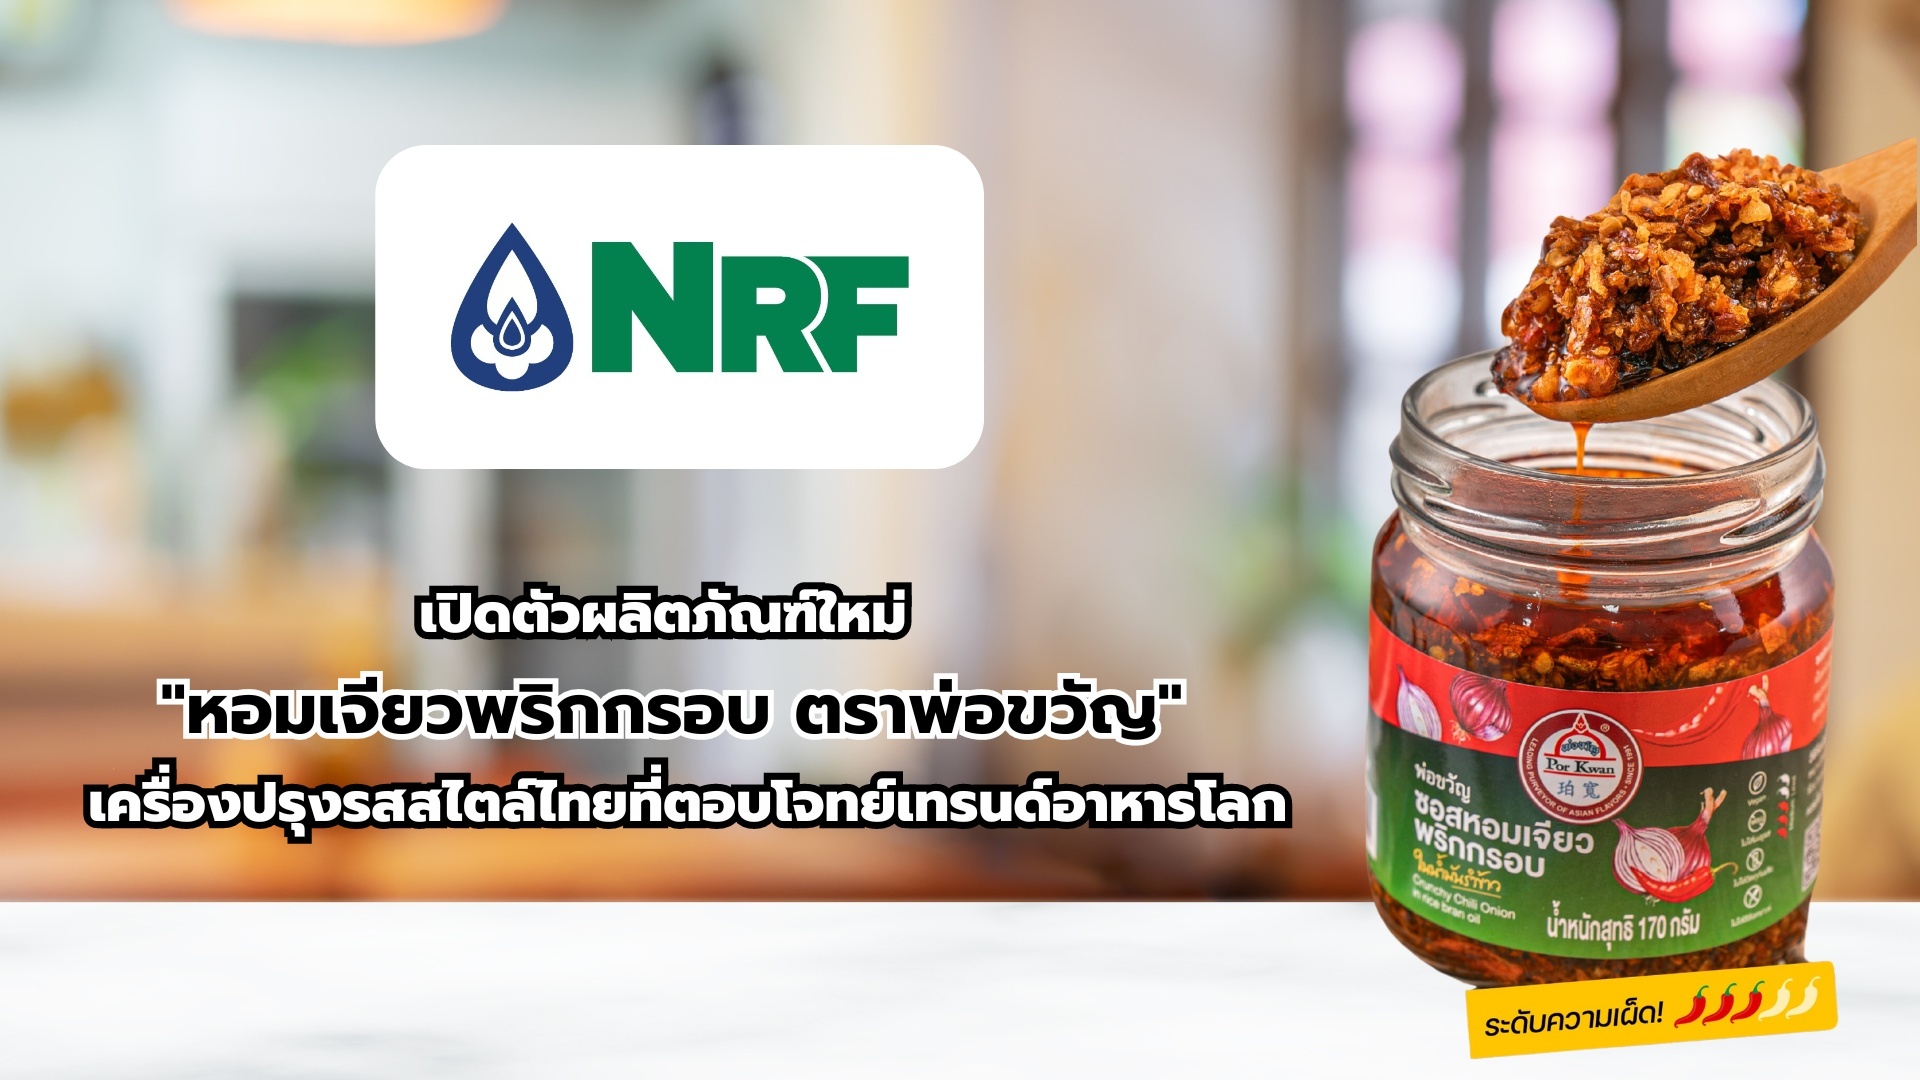 NRF เปิดตัวผลิตภัณฑ์ใหม่ "หอมเจียวพริกกรอบ ตราพ่อขวัญ"  เครื่องปรุงรสสไตล์ไทยที่ตอบโจทย์เทรนด์อาหารโลก